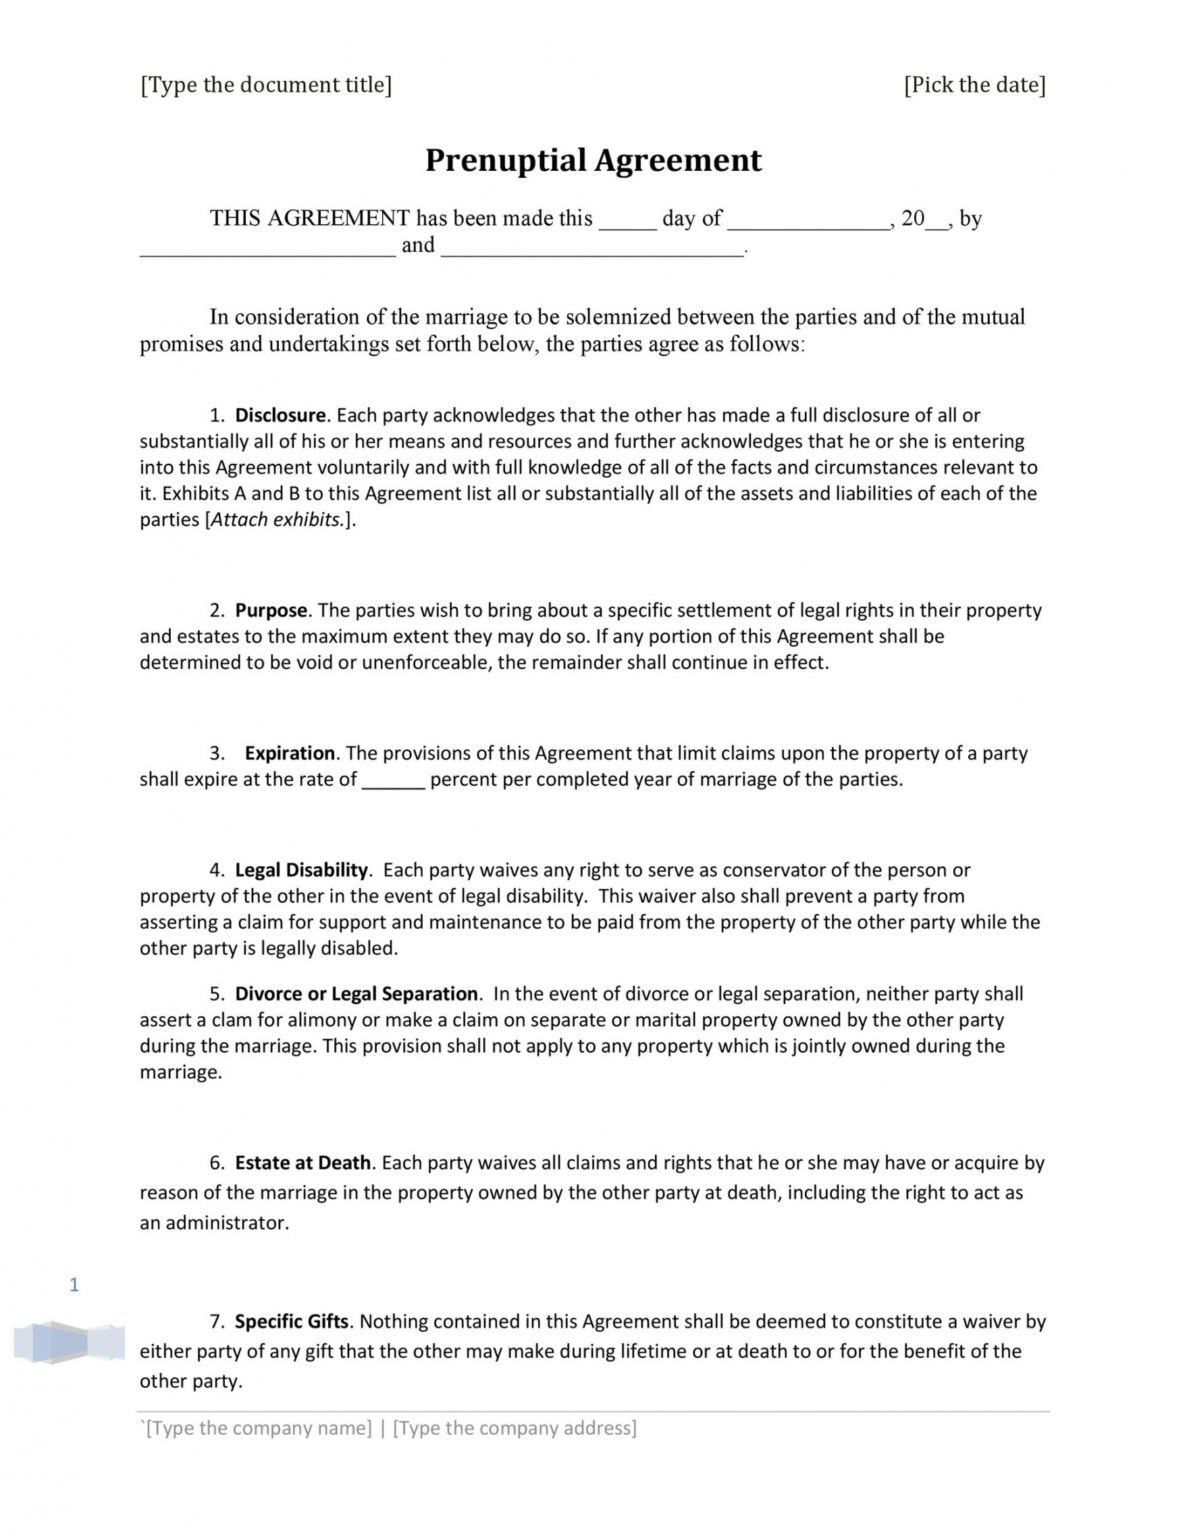 printable-30-prenuptial-agreement-samples-forms-templatelab-prenuptial-agreement-template